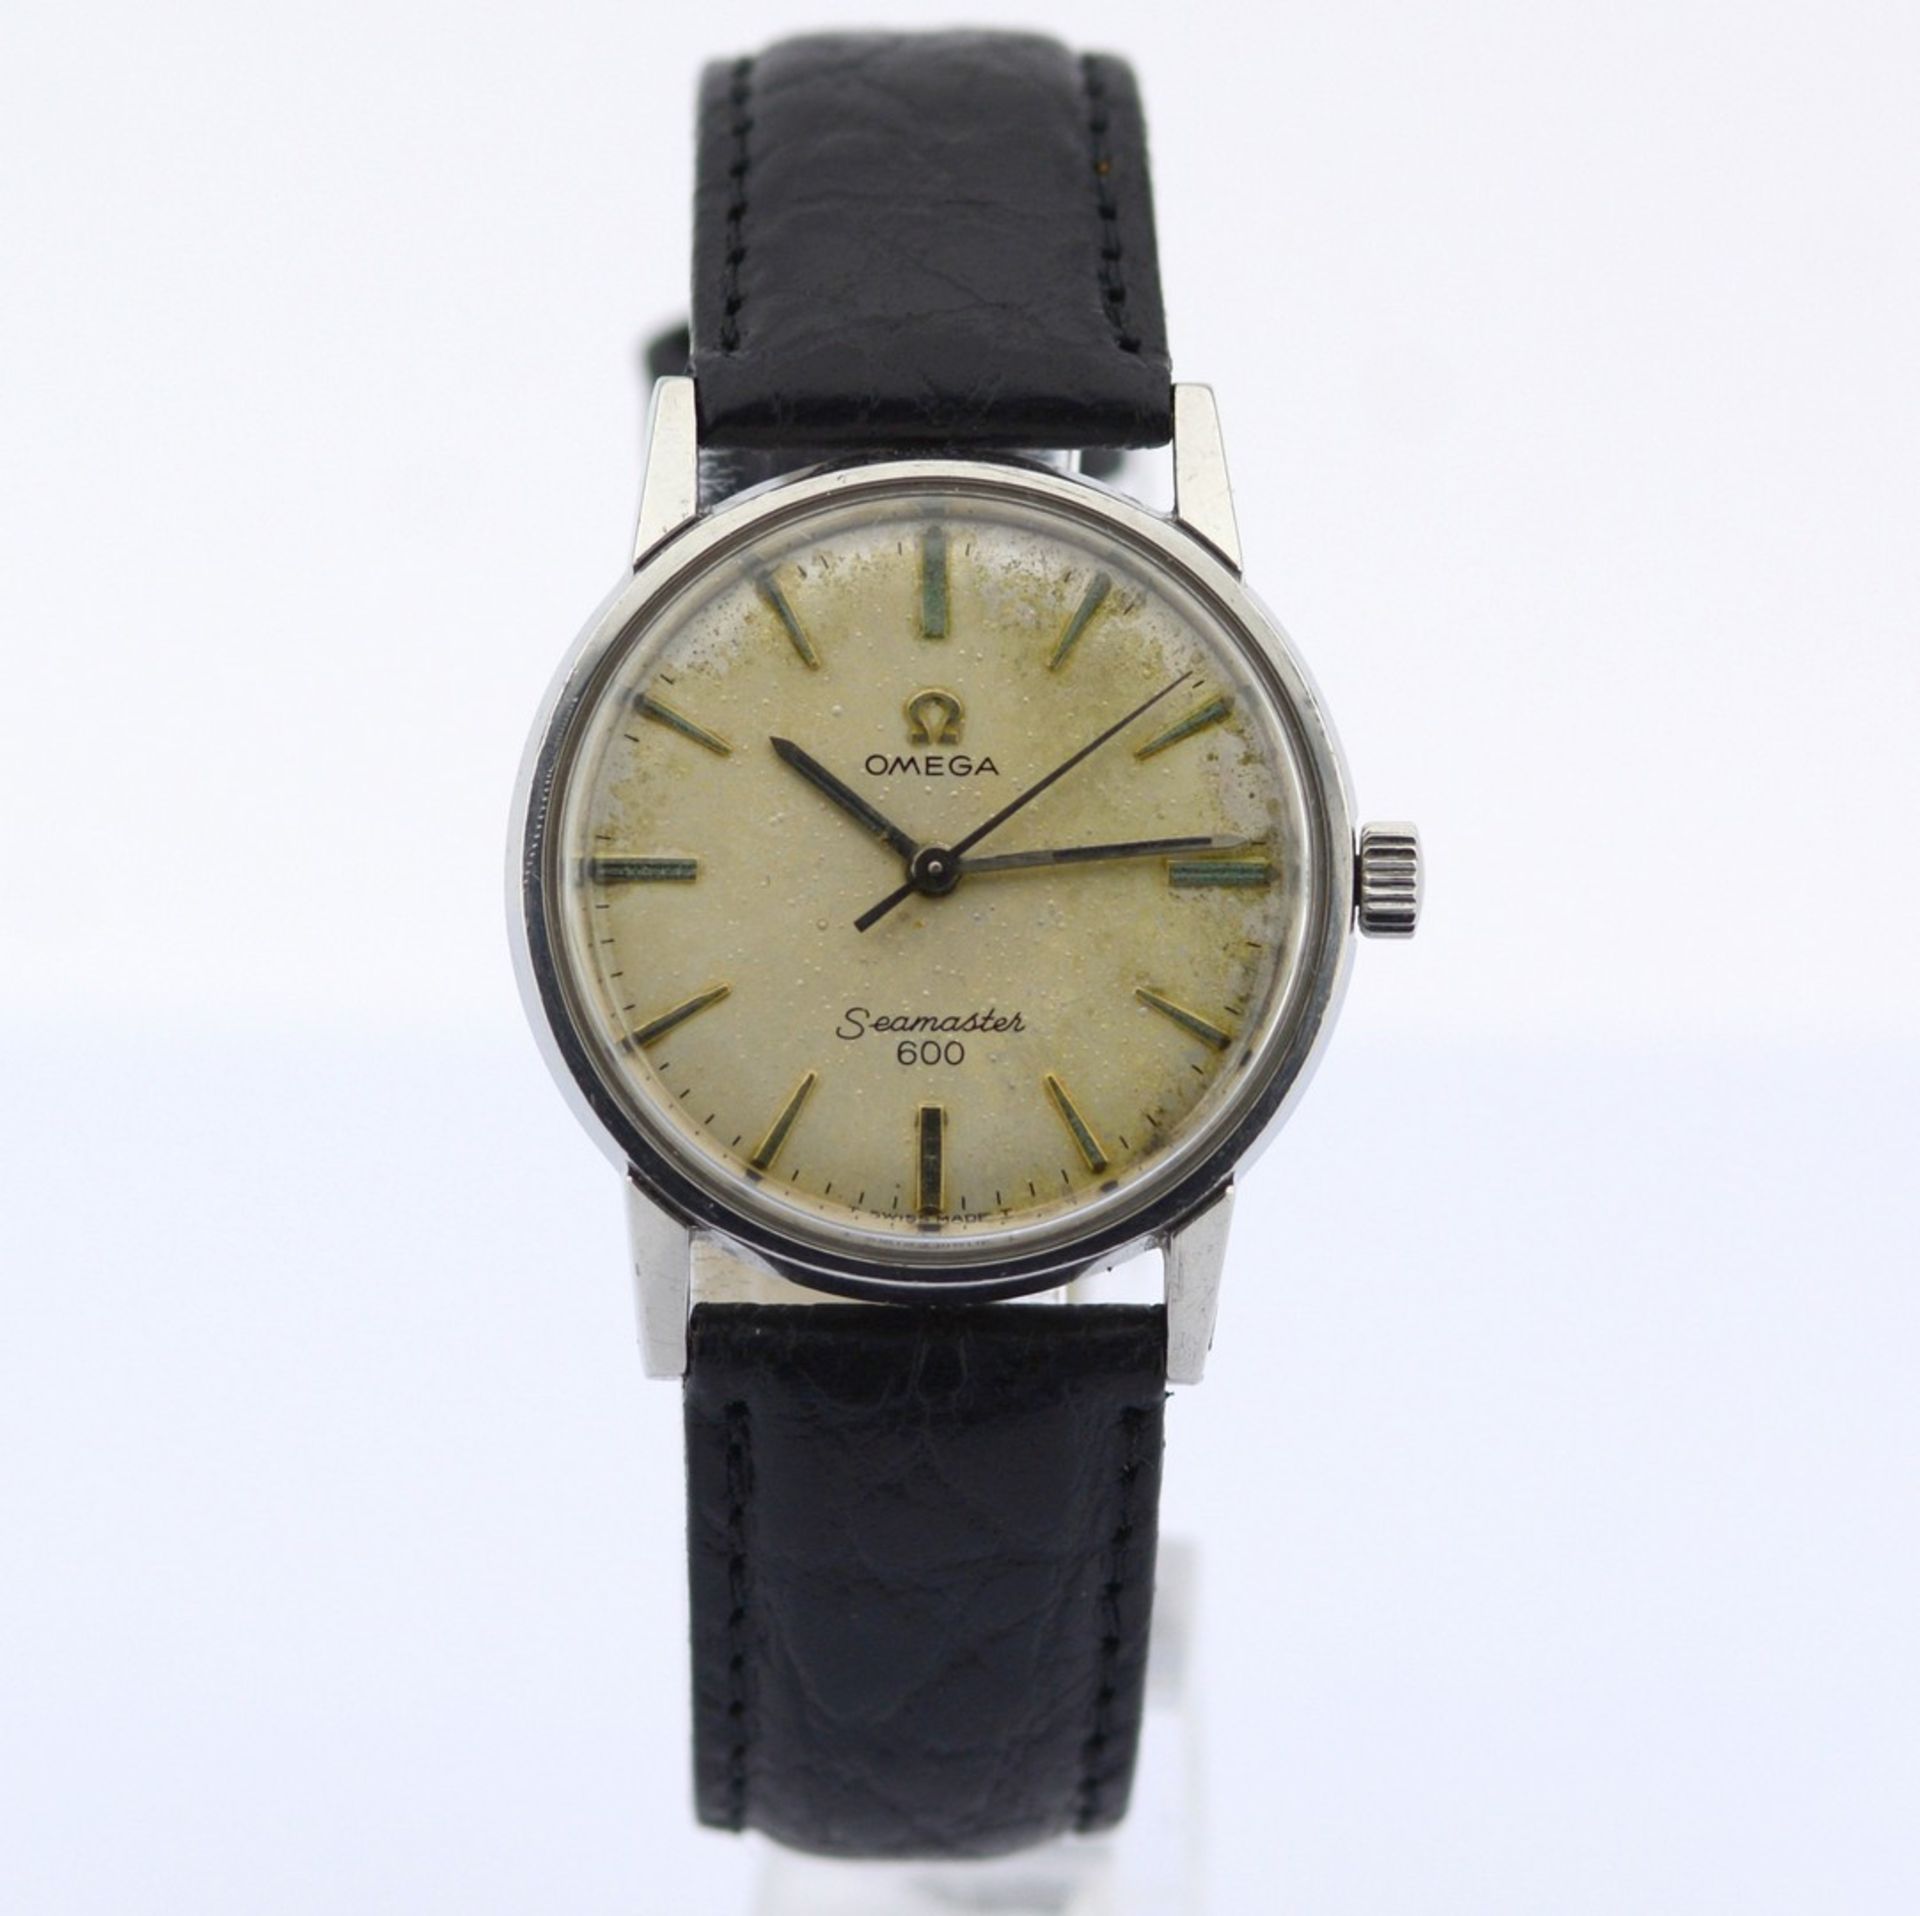 Omega / Seamaster 600 Vintage - Gentlmen's Steel Wrist Watch - Image 5 of 7